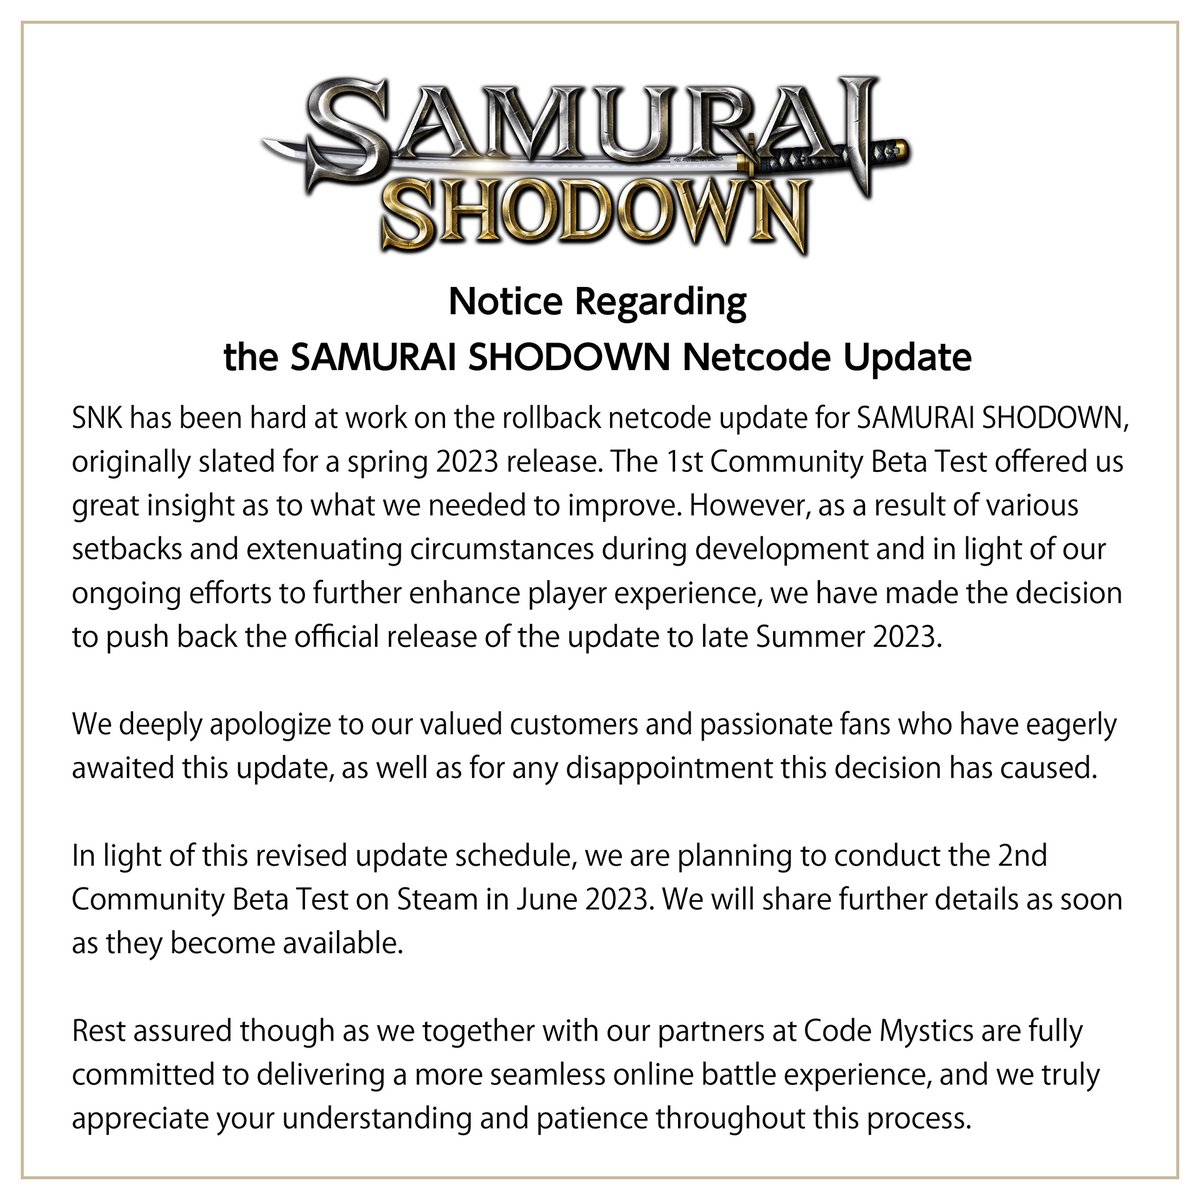 【SAMURAI SHODOWN】
Notice Regarding Rollback Netcode Update.

＃SNK ＃SamSho